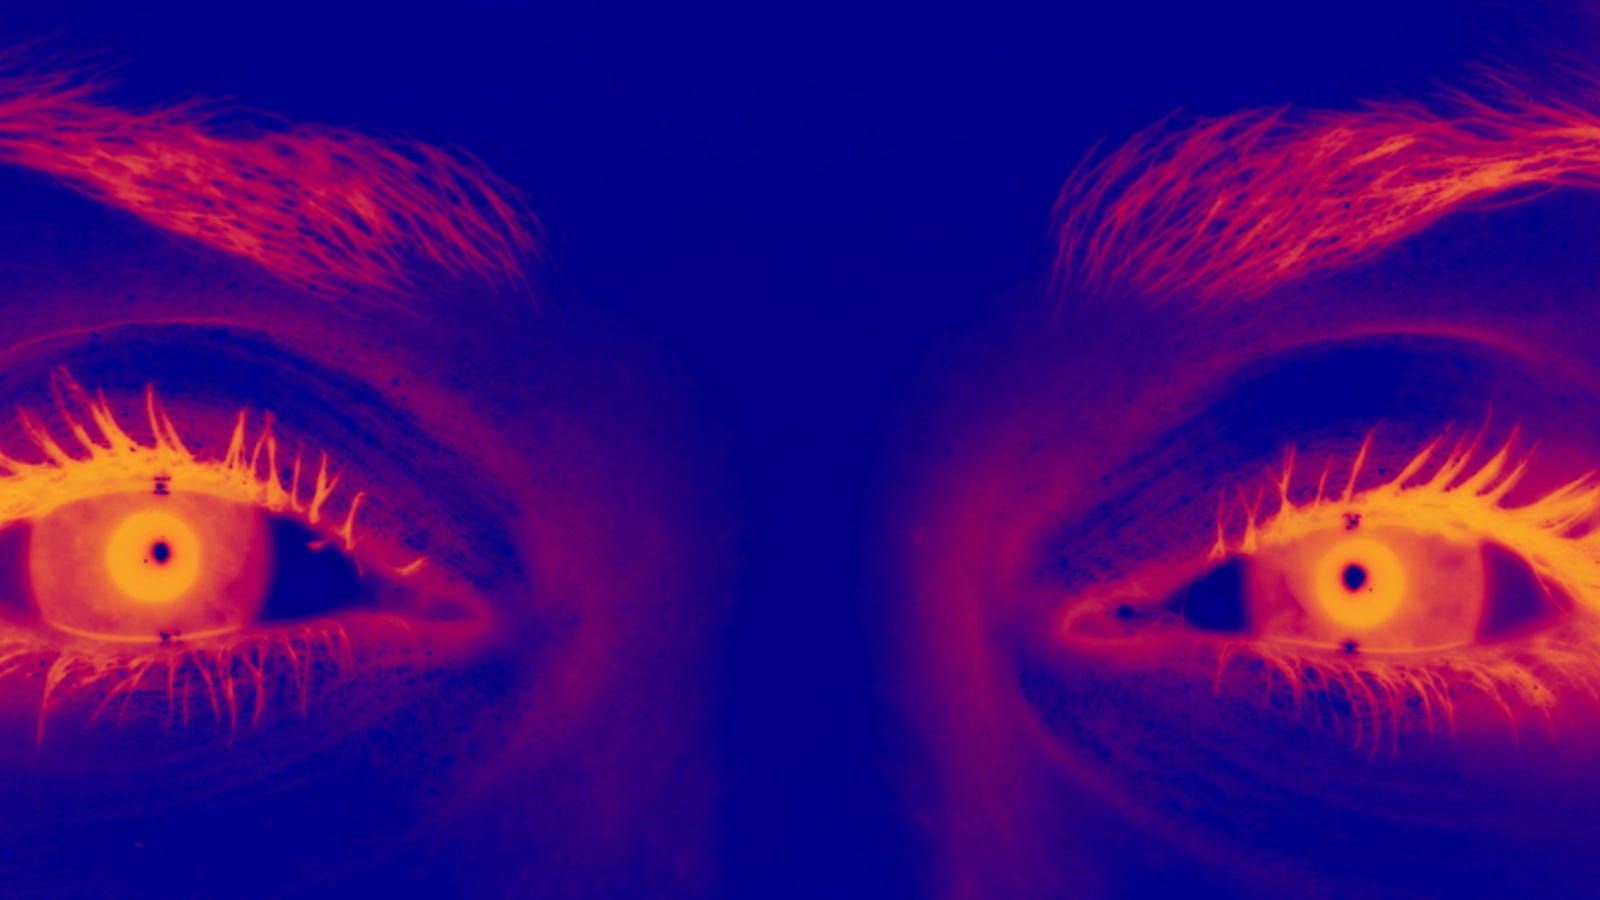 xray vision night vision infrared